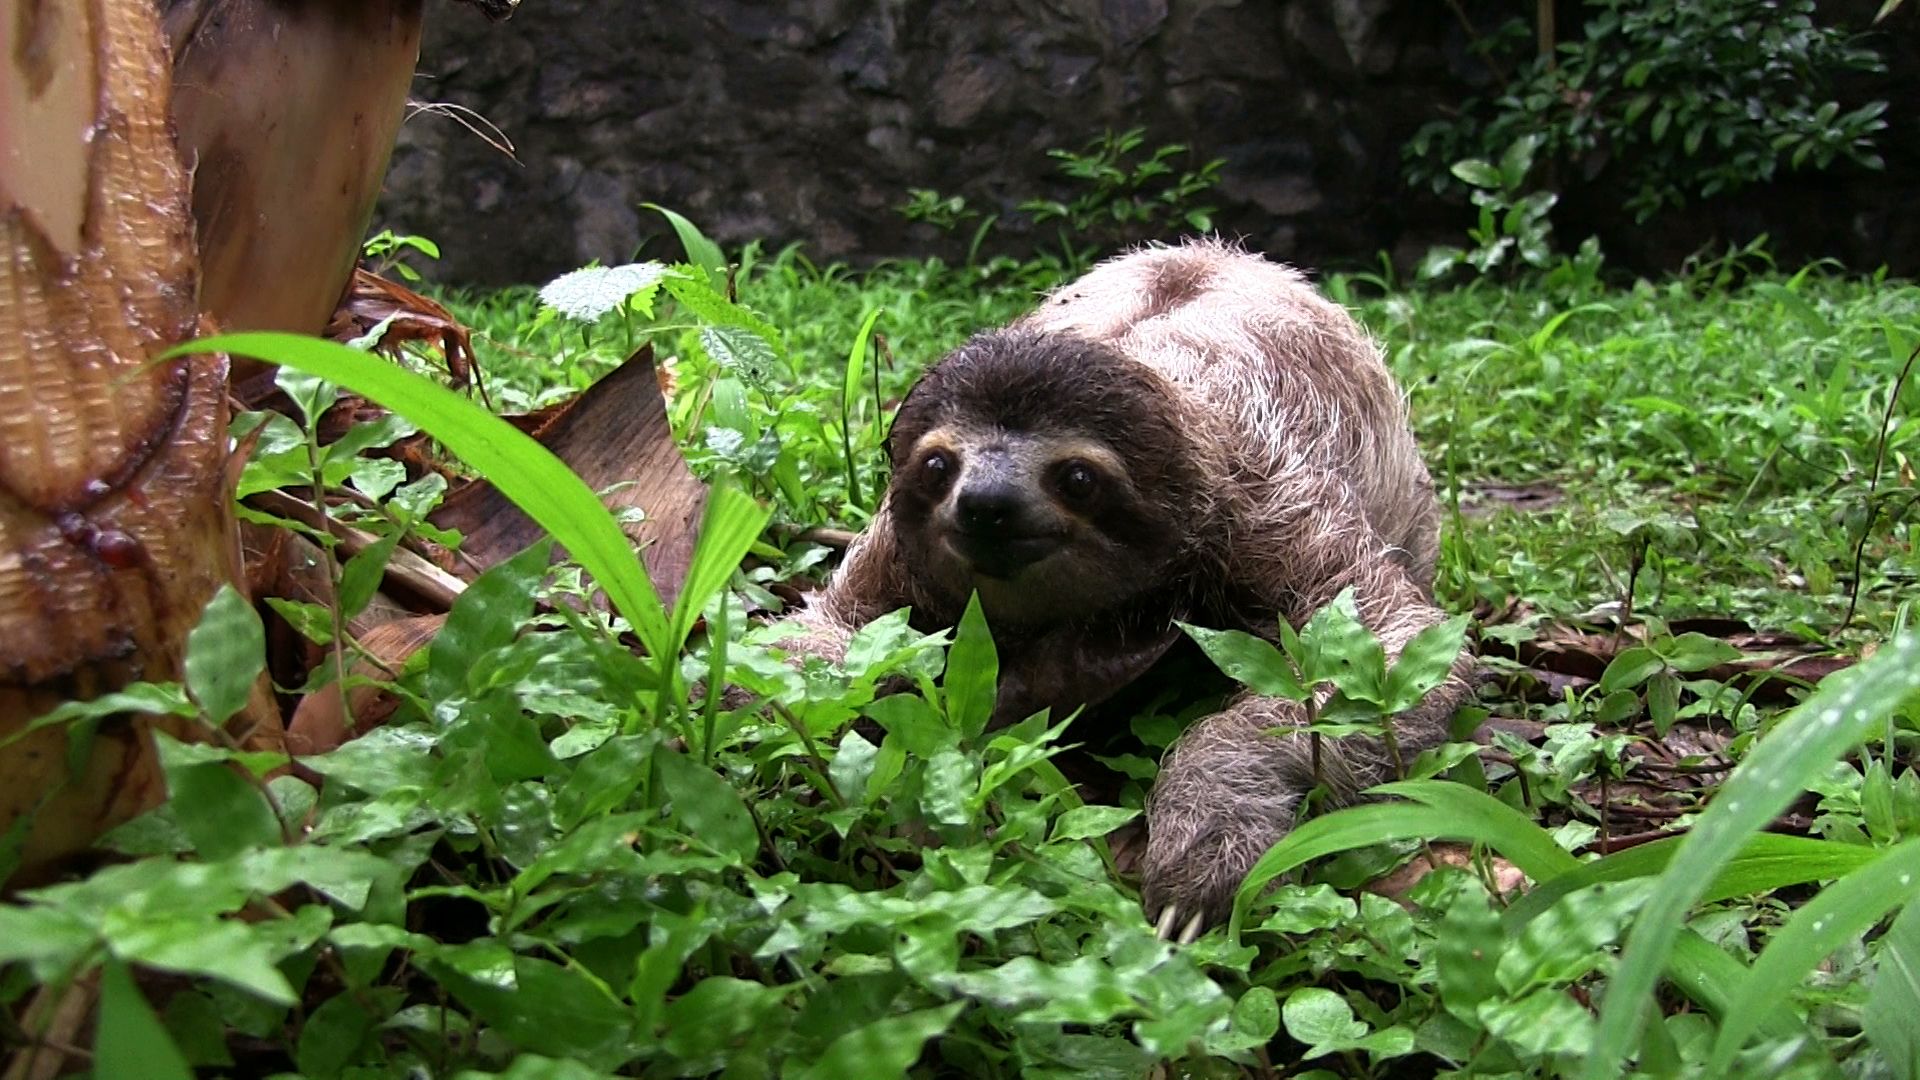 Sloth download wallpaper image